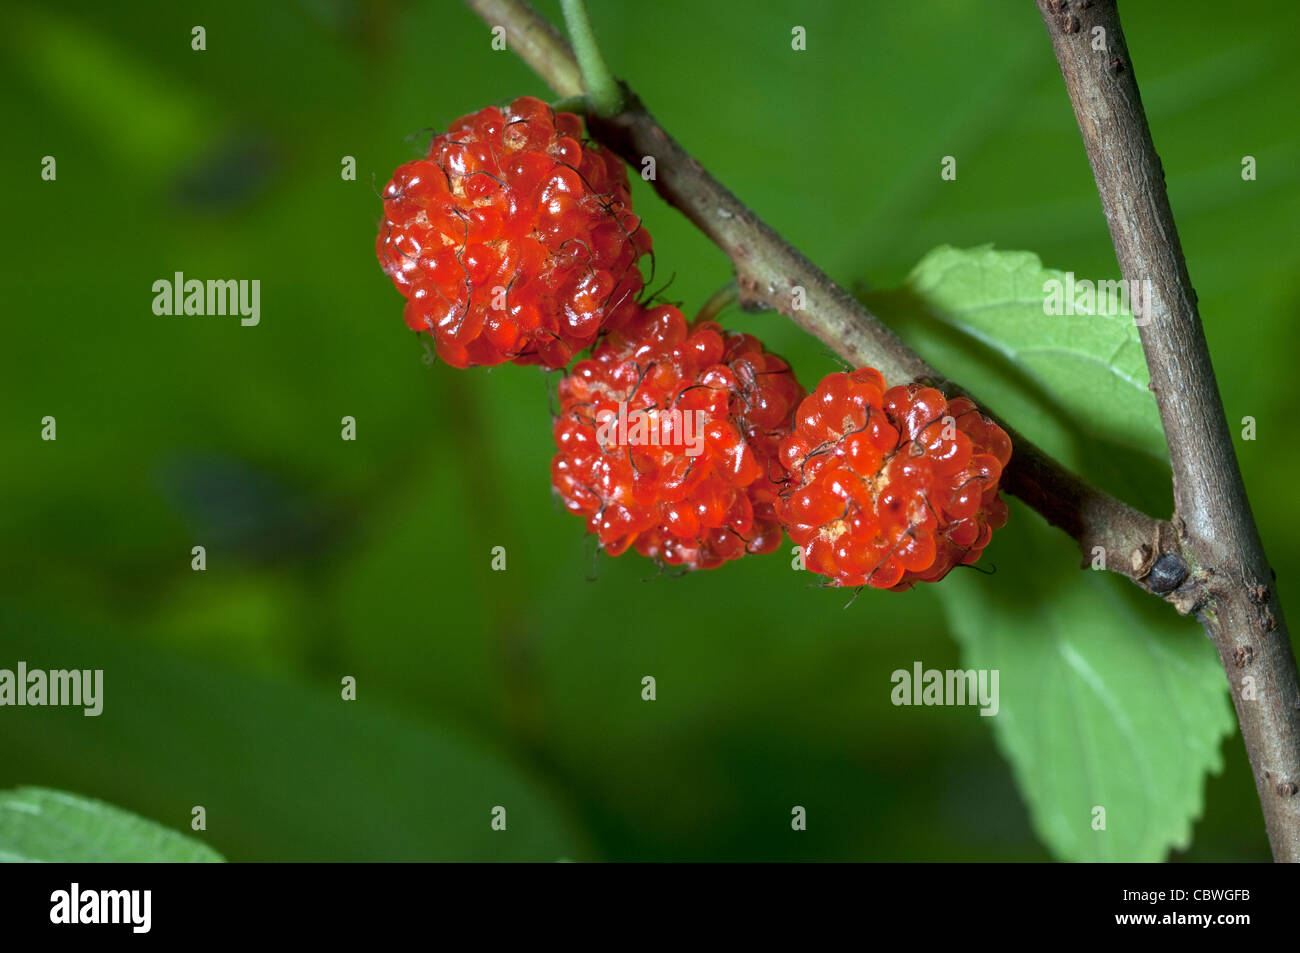 Paper Mulberry (Broussonetia kazinoki Kozo), ripe fruit on a twig. Stock Photo